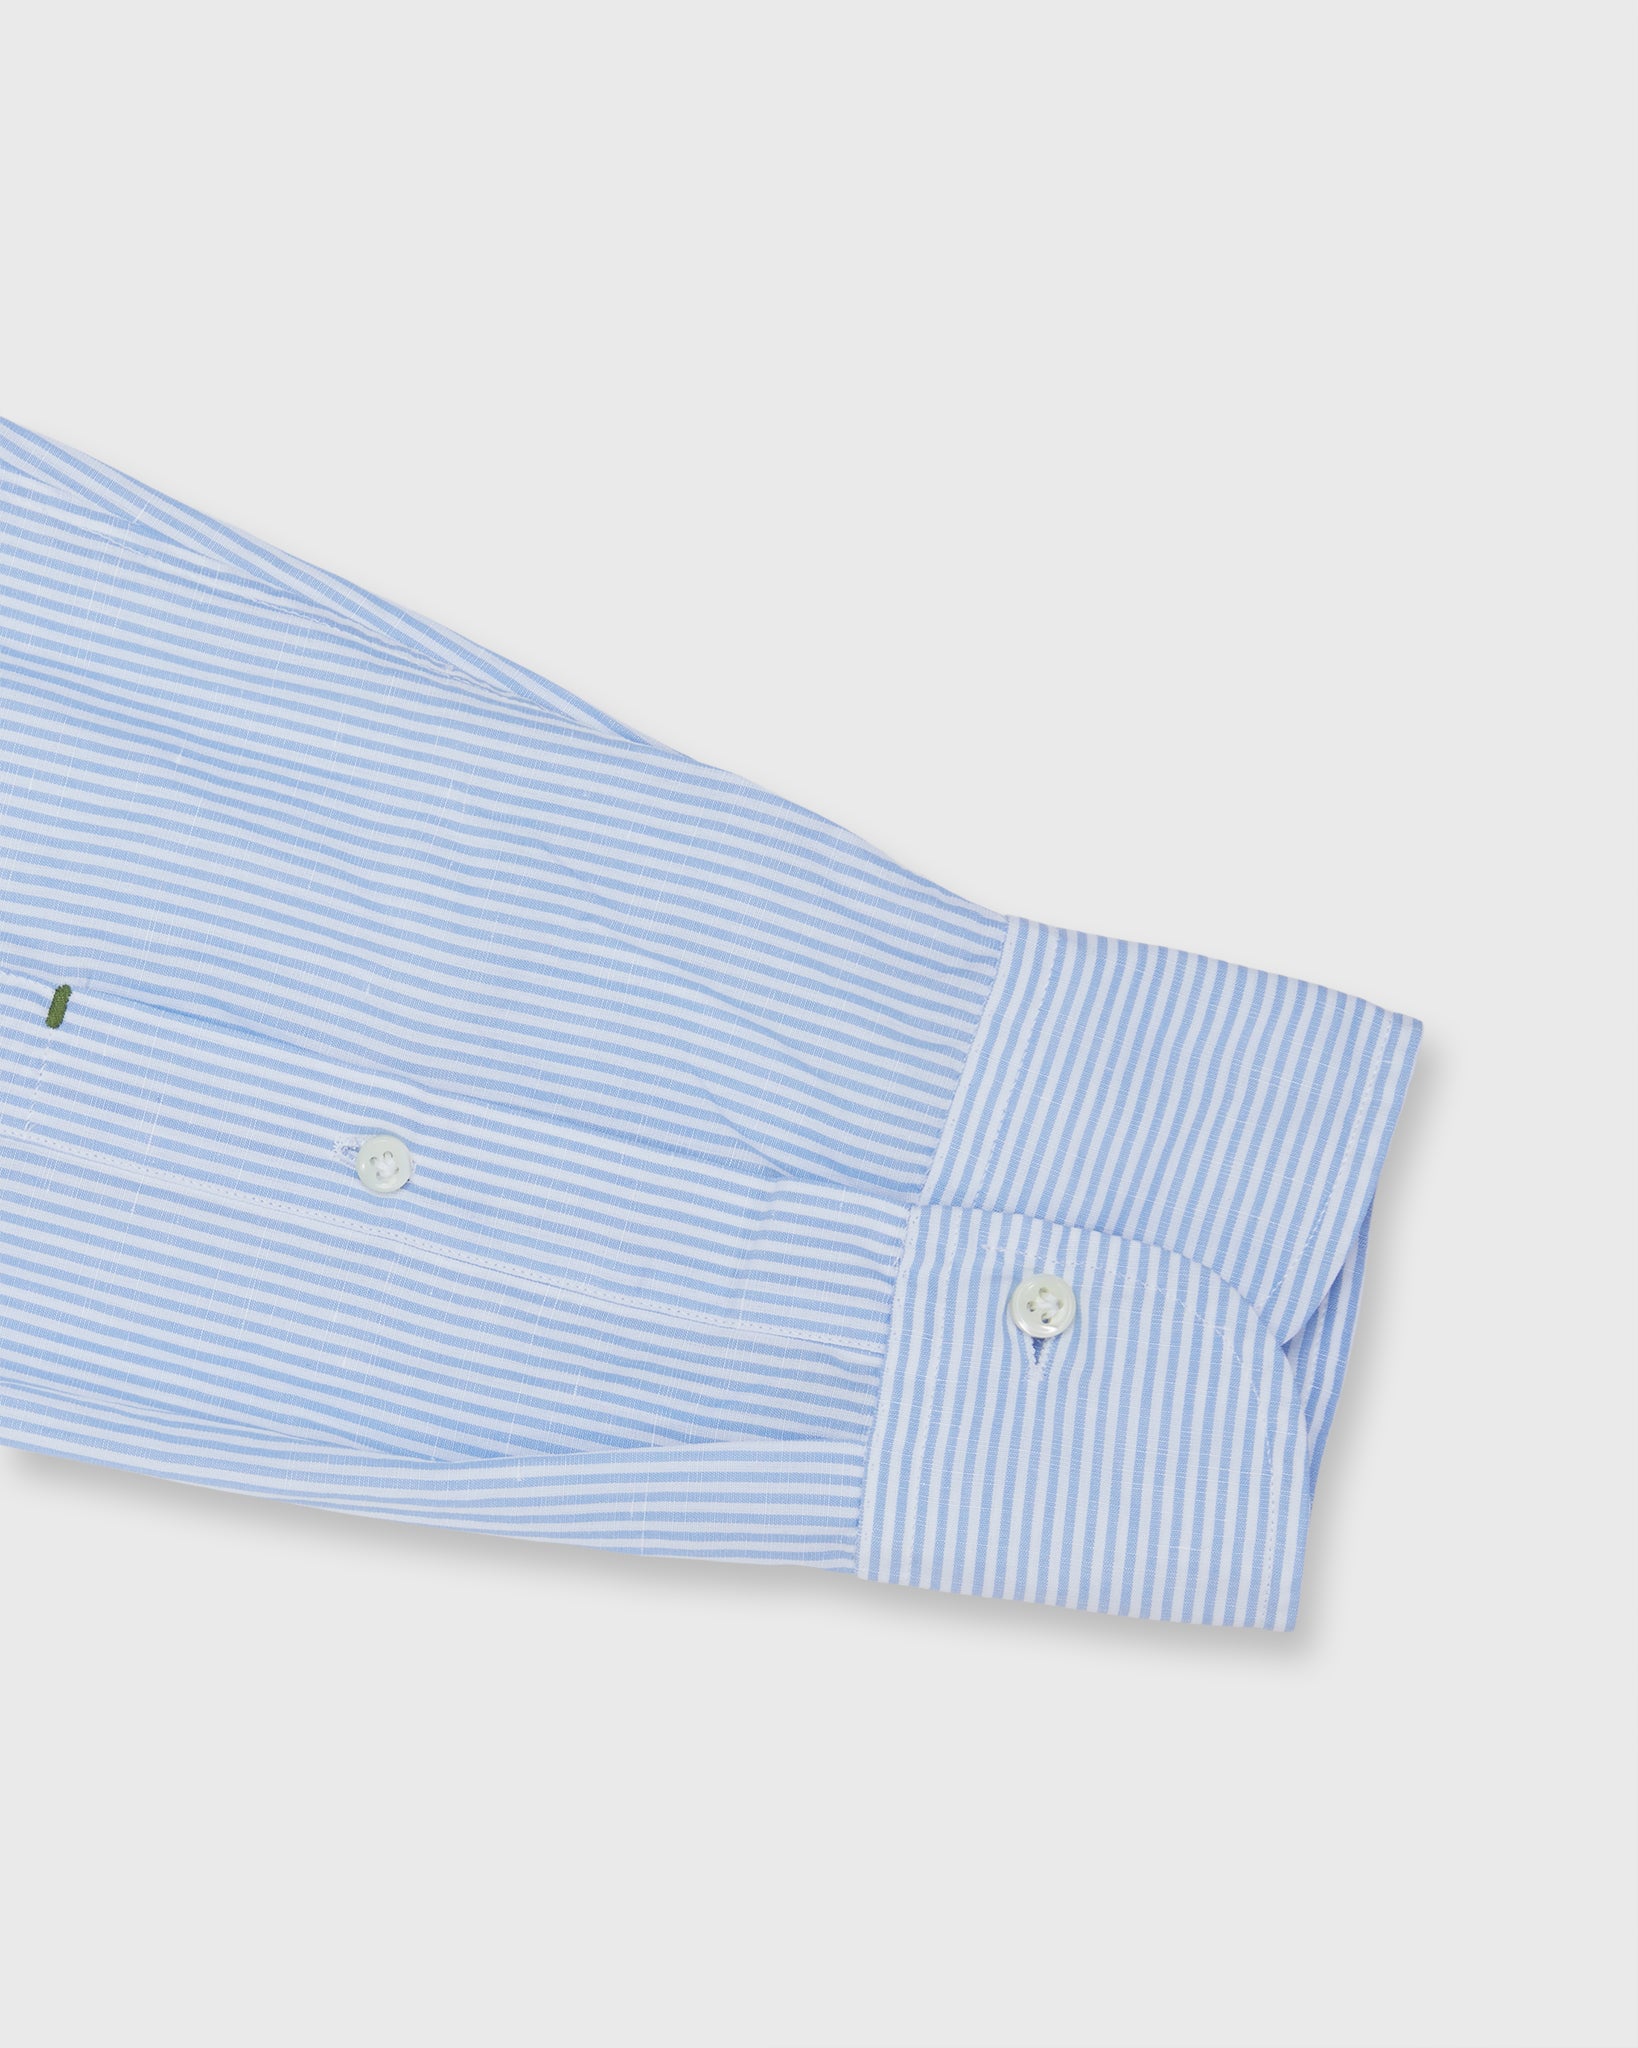 Otto Handmade Sport Shirt in Blue/White Bengal Stripe Cotolino